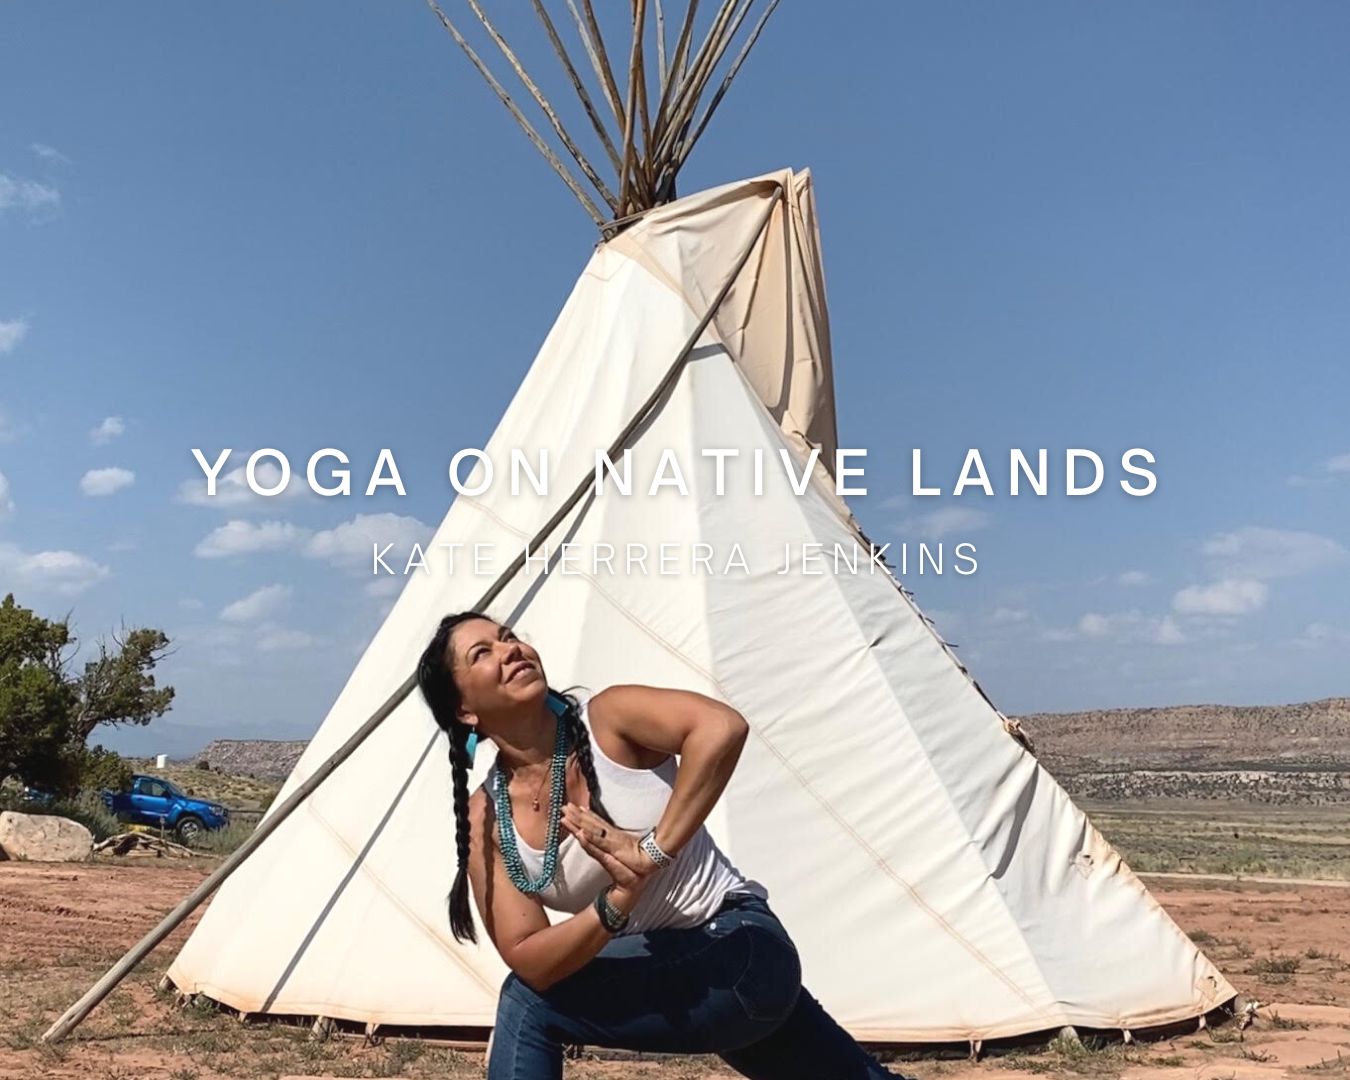 #100 – Yoga is Ceremony – Yoga on Native Lands with Kate Herrera Jenkins